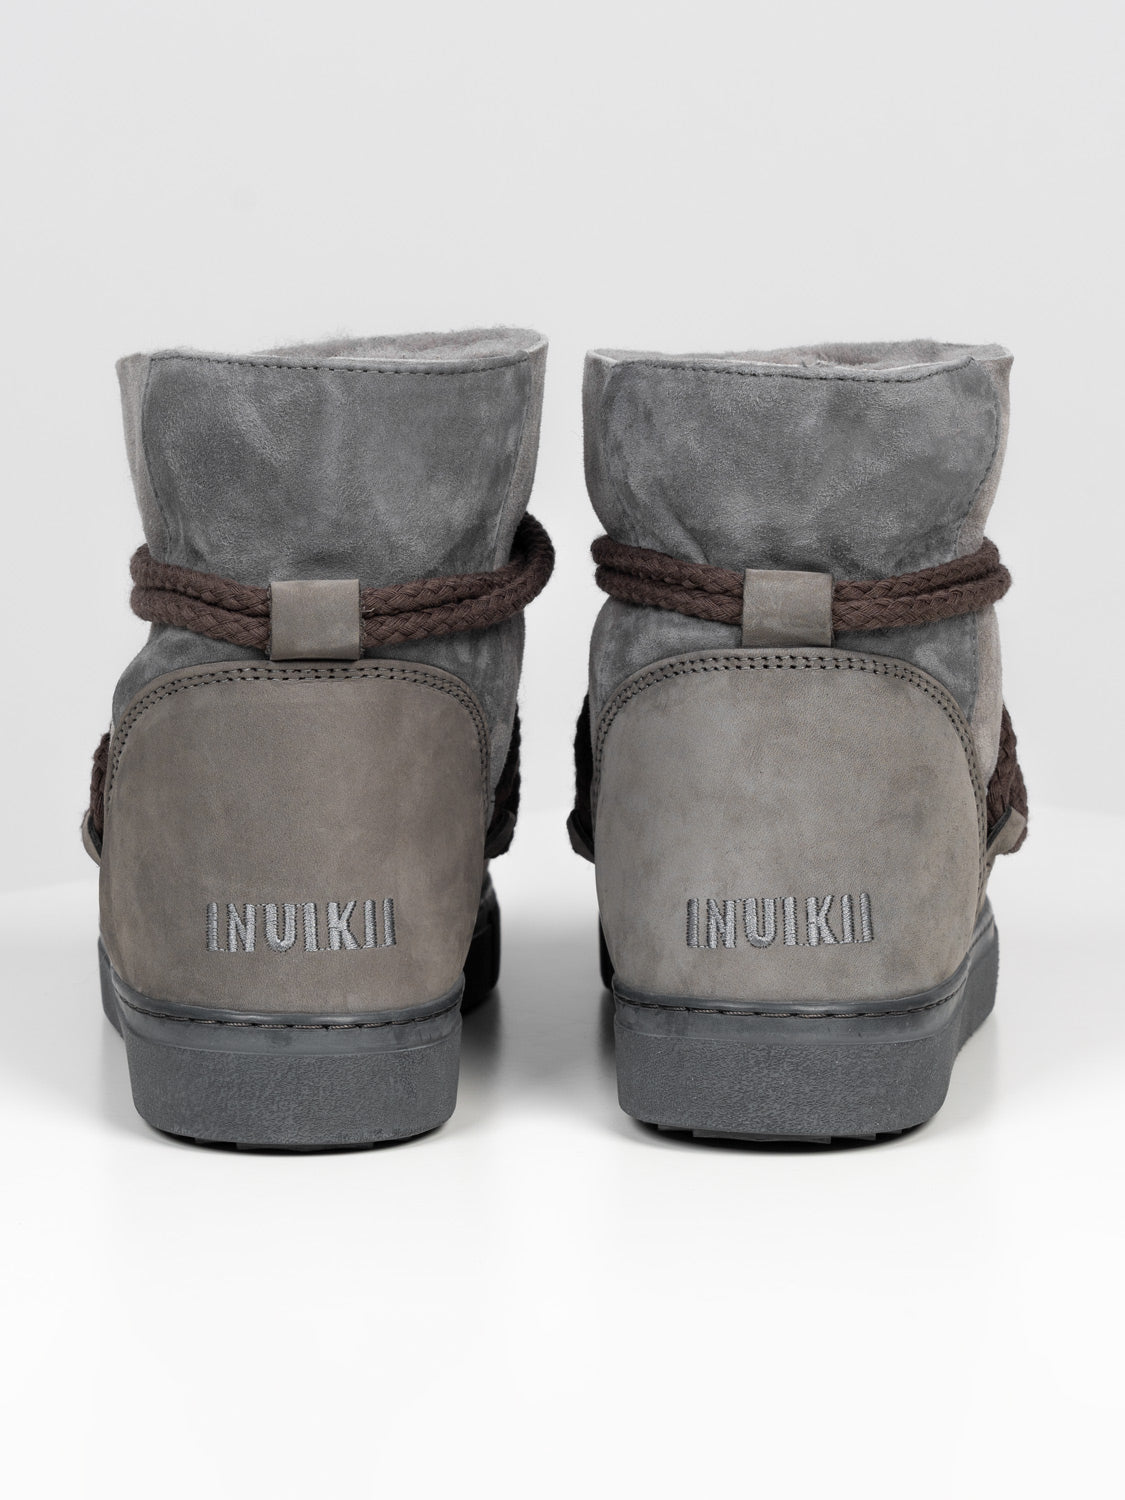 Patchwork Dark Grey Boots - Grau